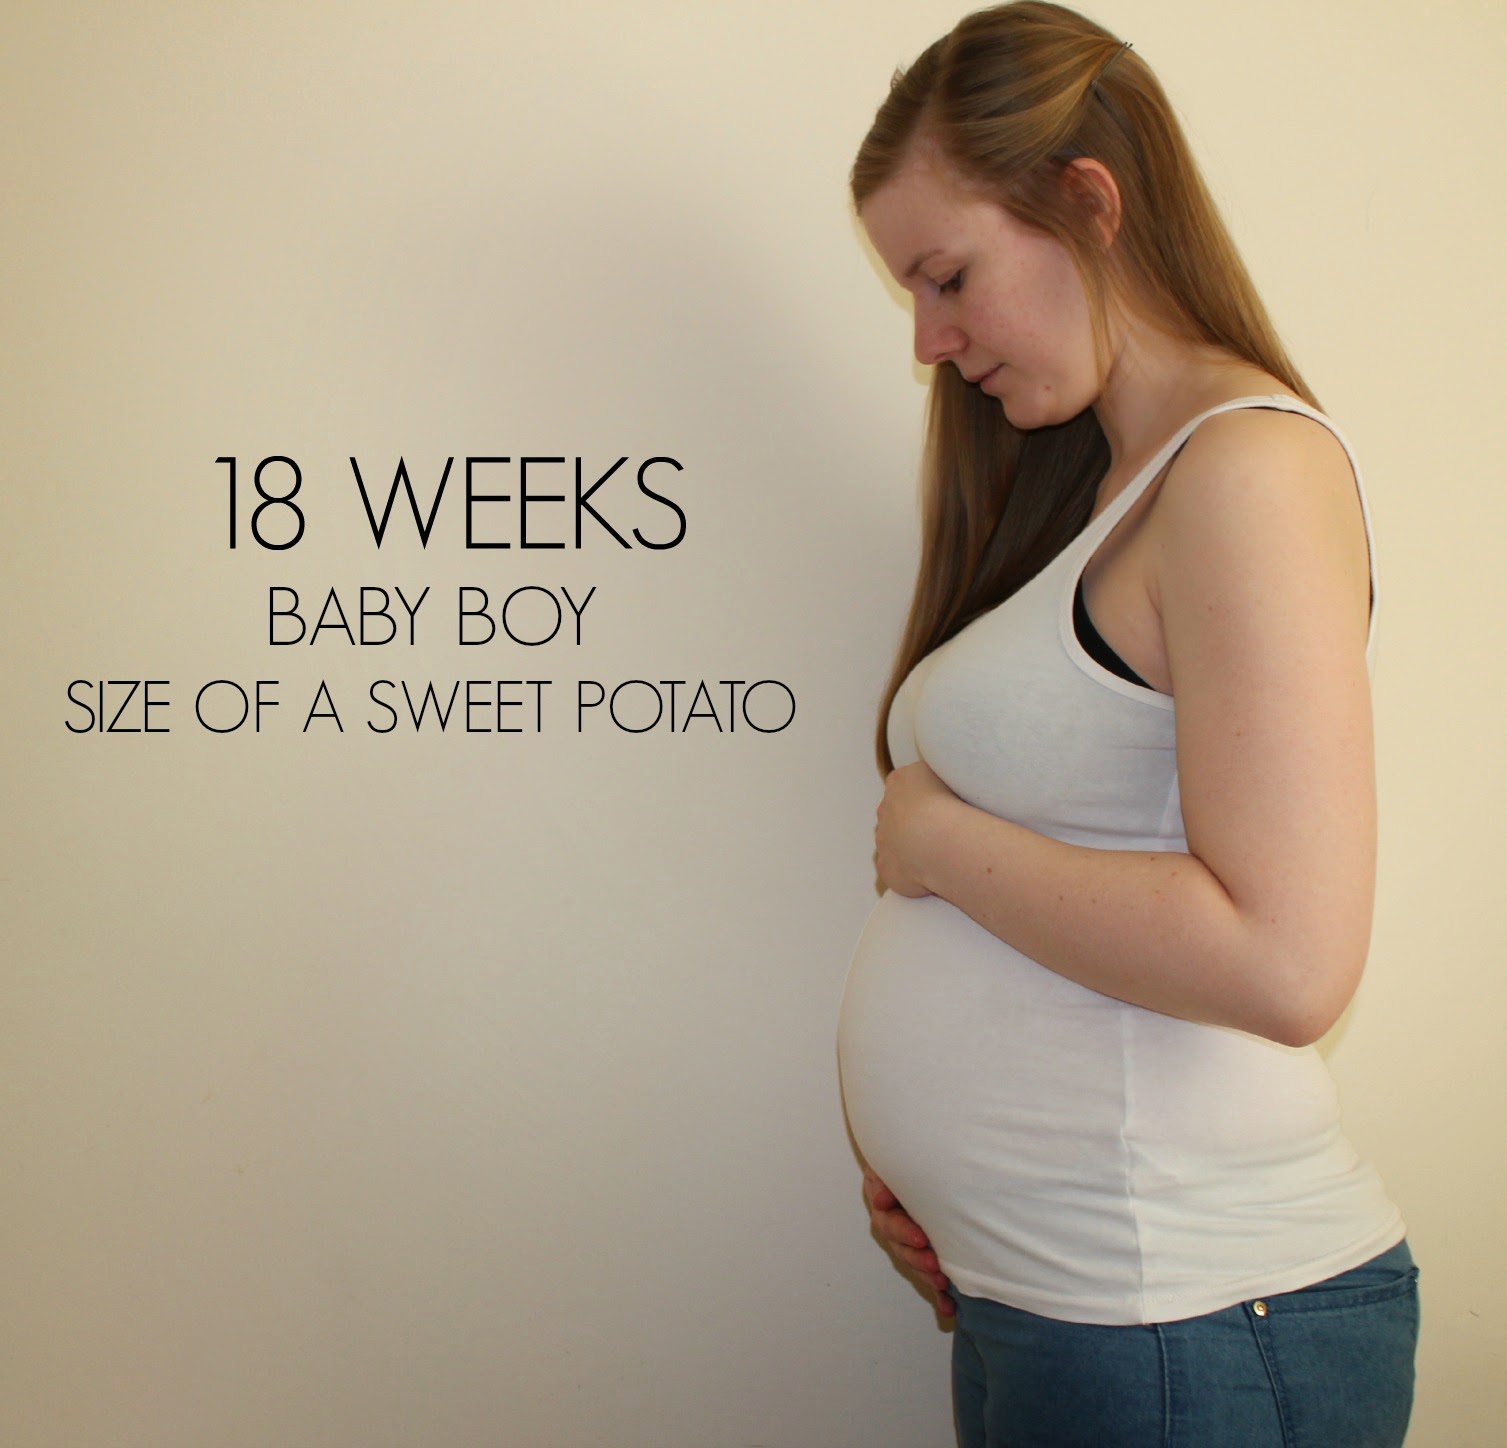 travel 18 weeks pregnant